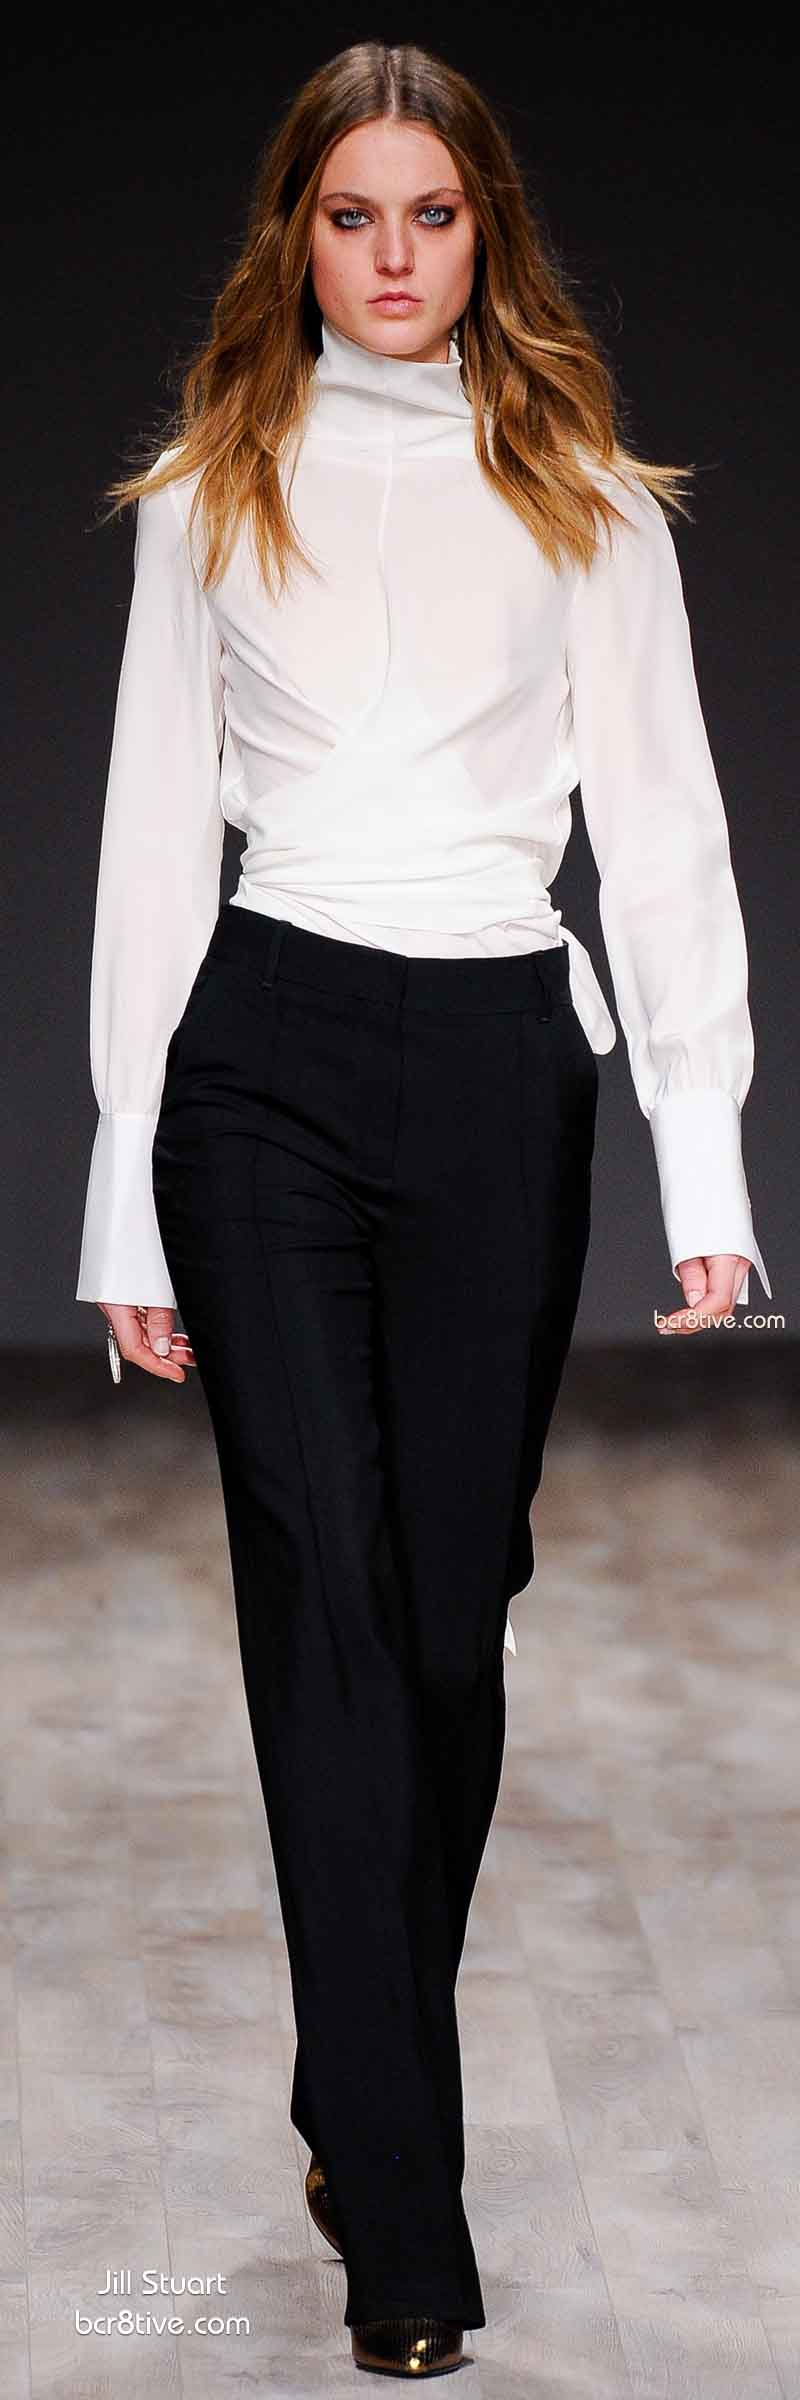 Fall 2014 Menswear Inspired Fashion - Jill Stuart